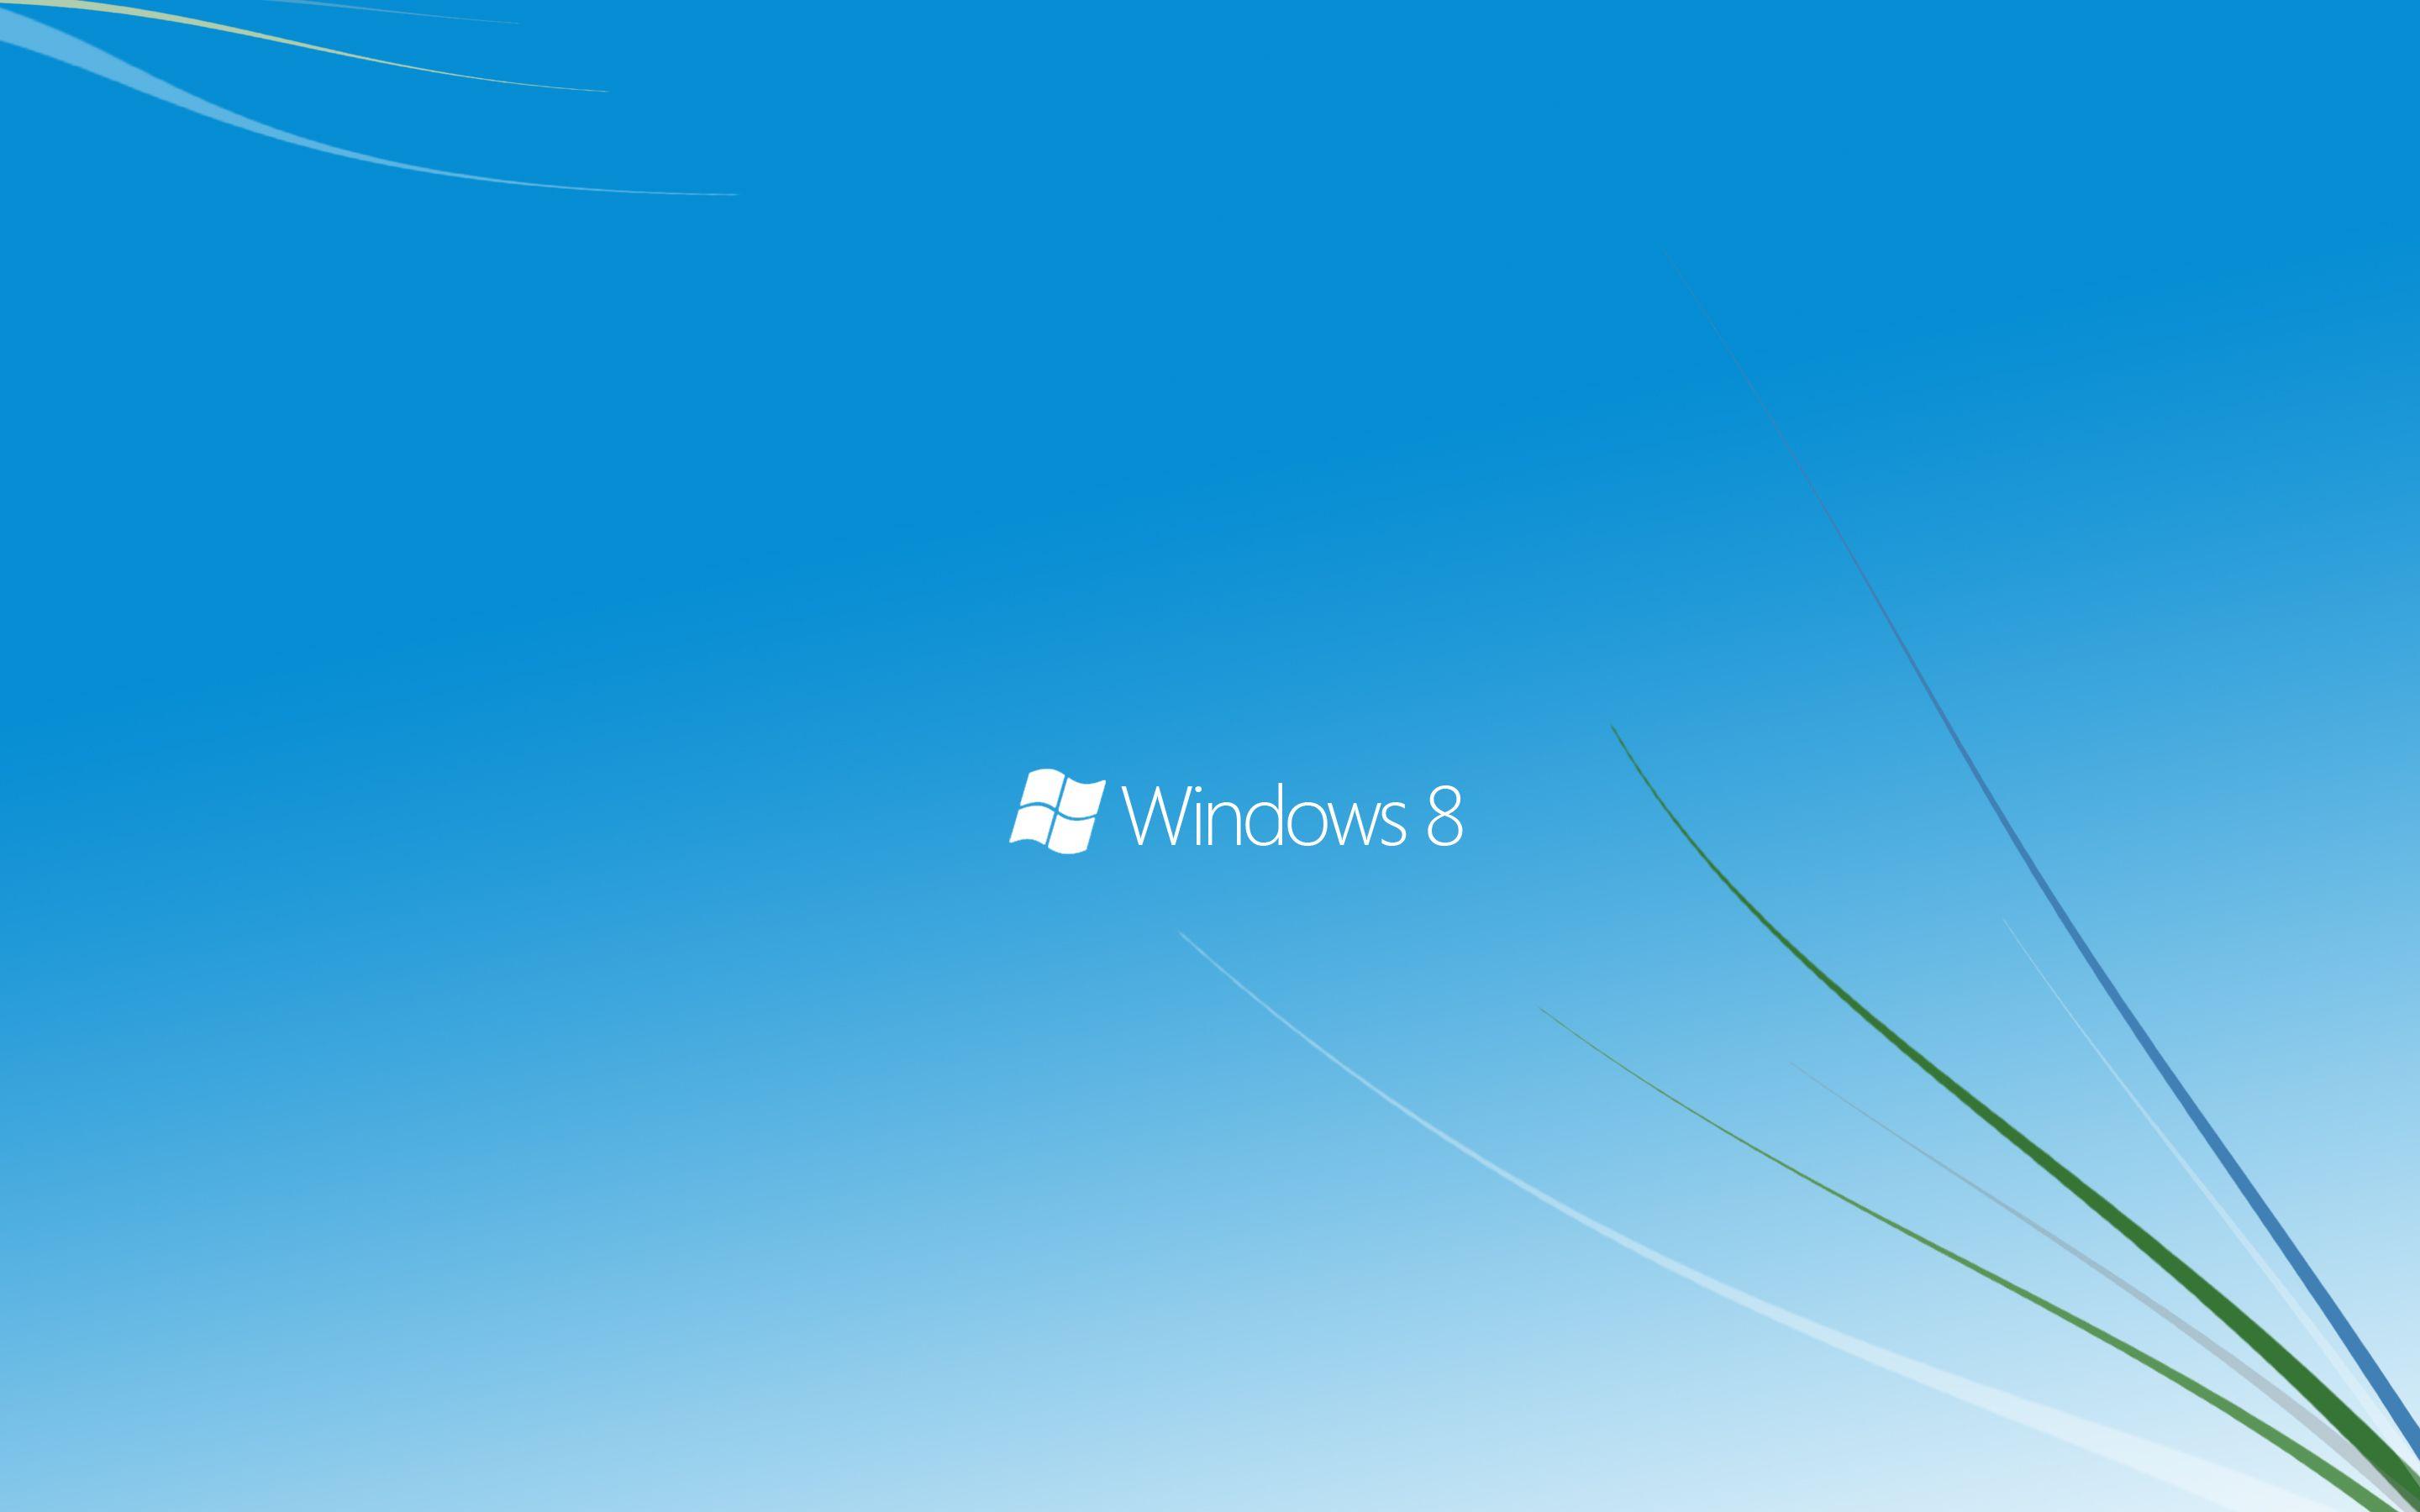 Windows Blue Background, Desktop wallpaper. brands and logos